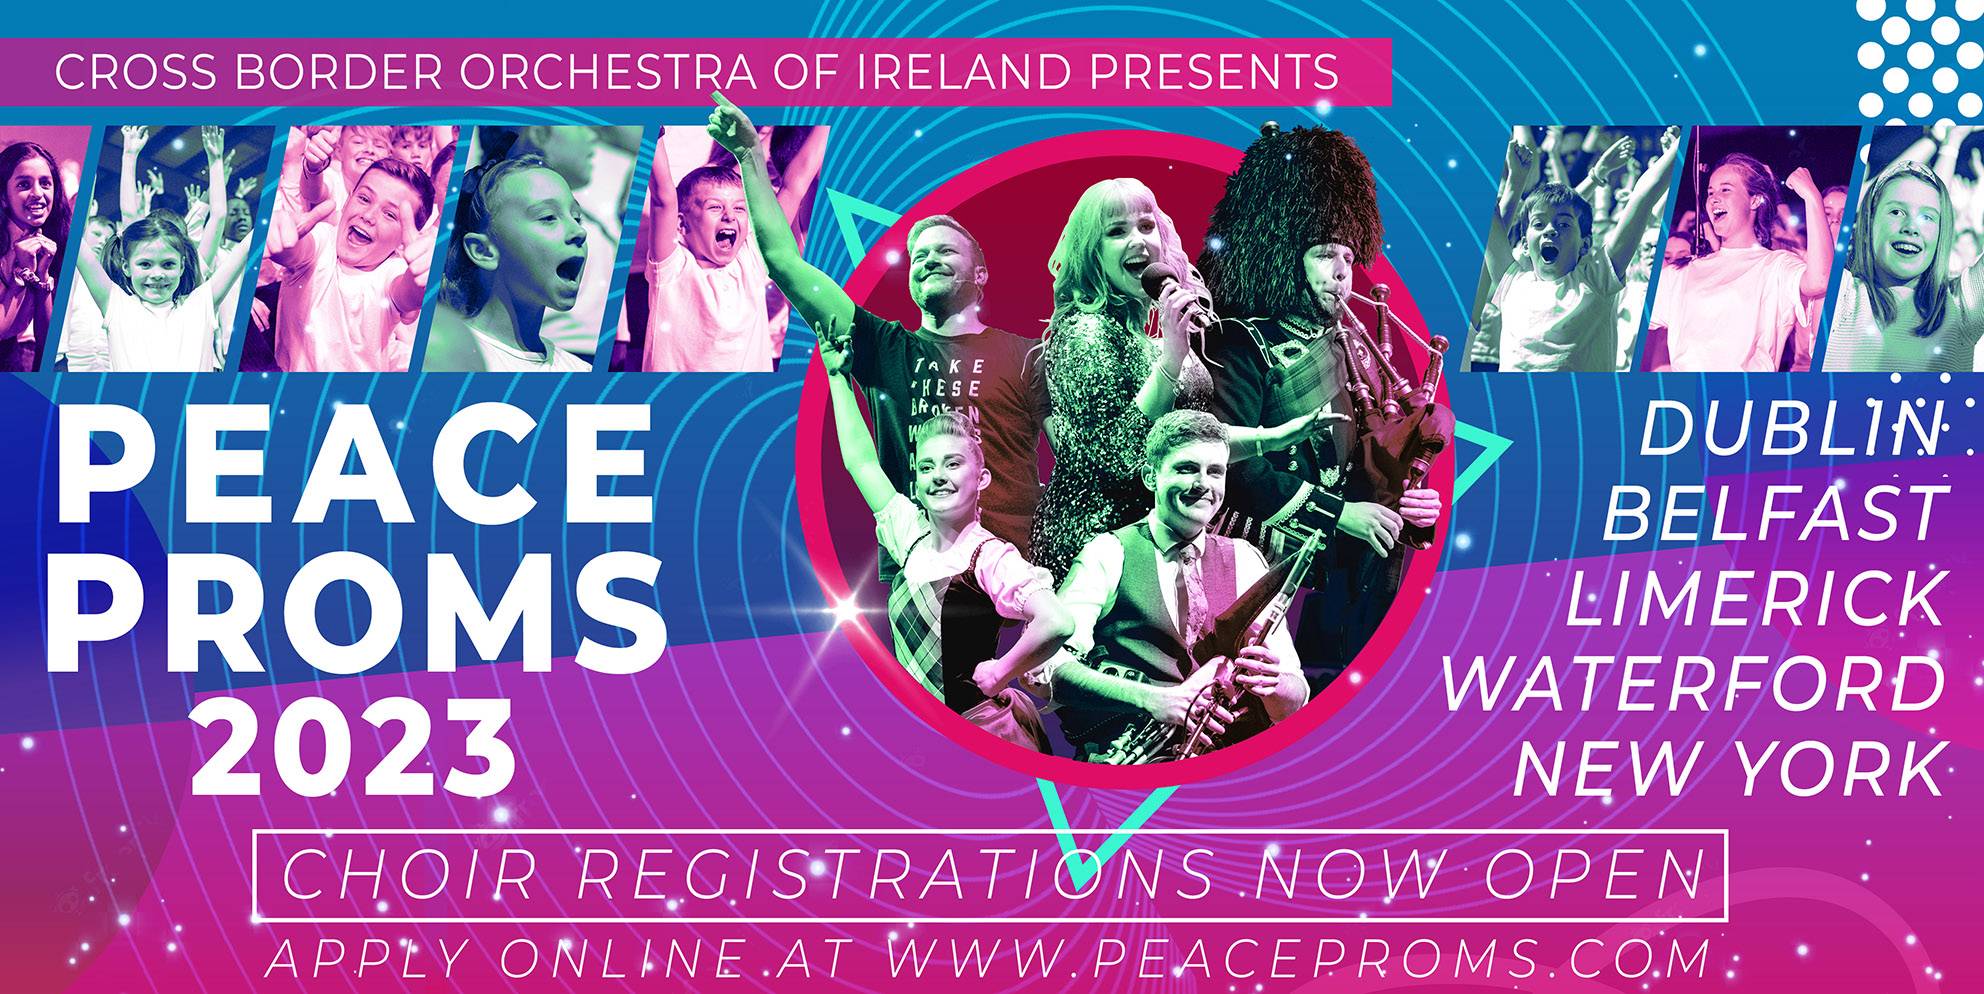 PEACE PROMS 2023 ANNOUNCED!!! Cross Border Orchestra of Ireland